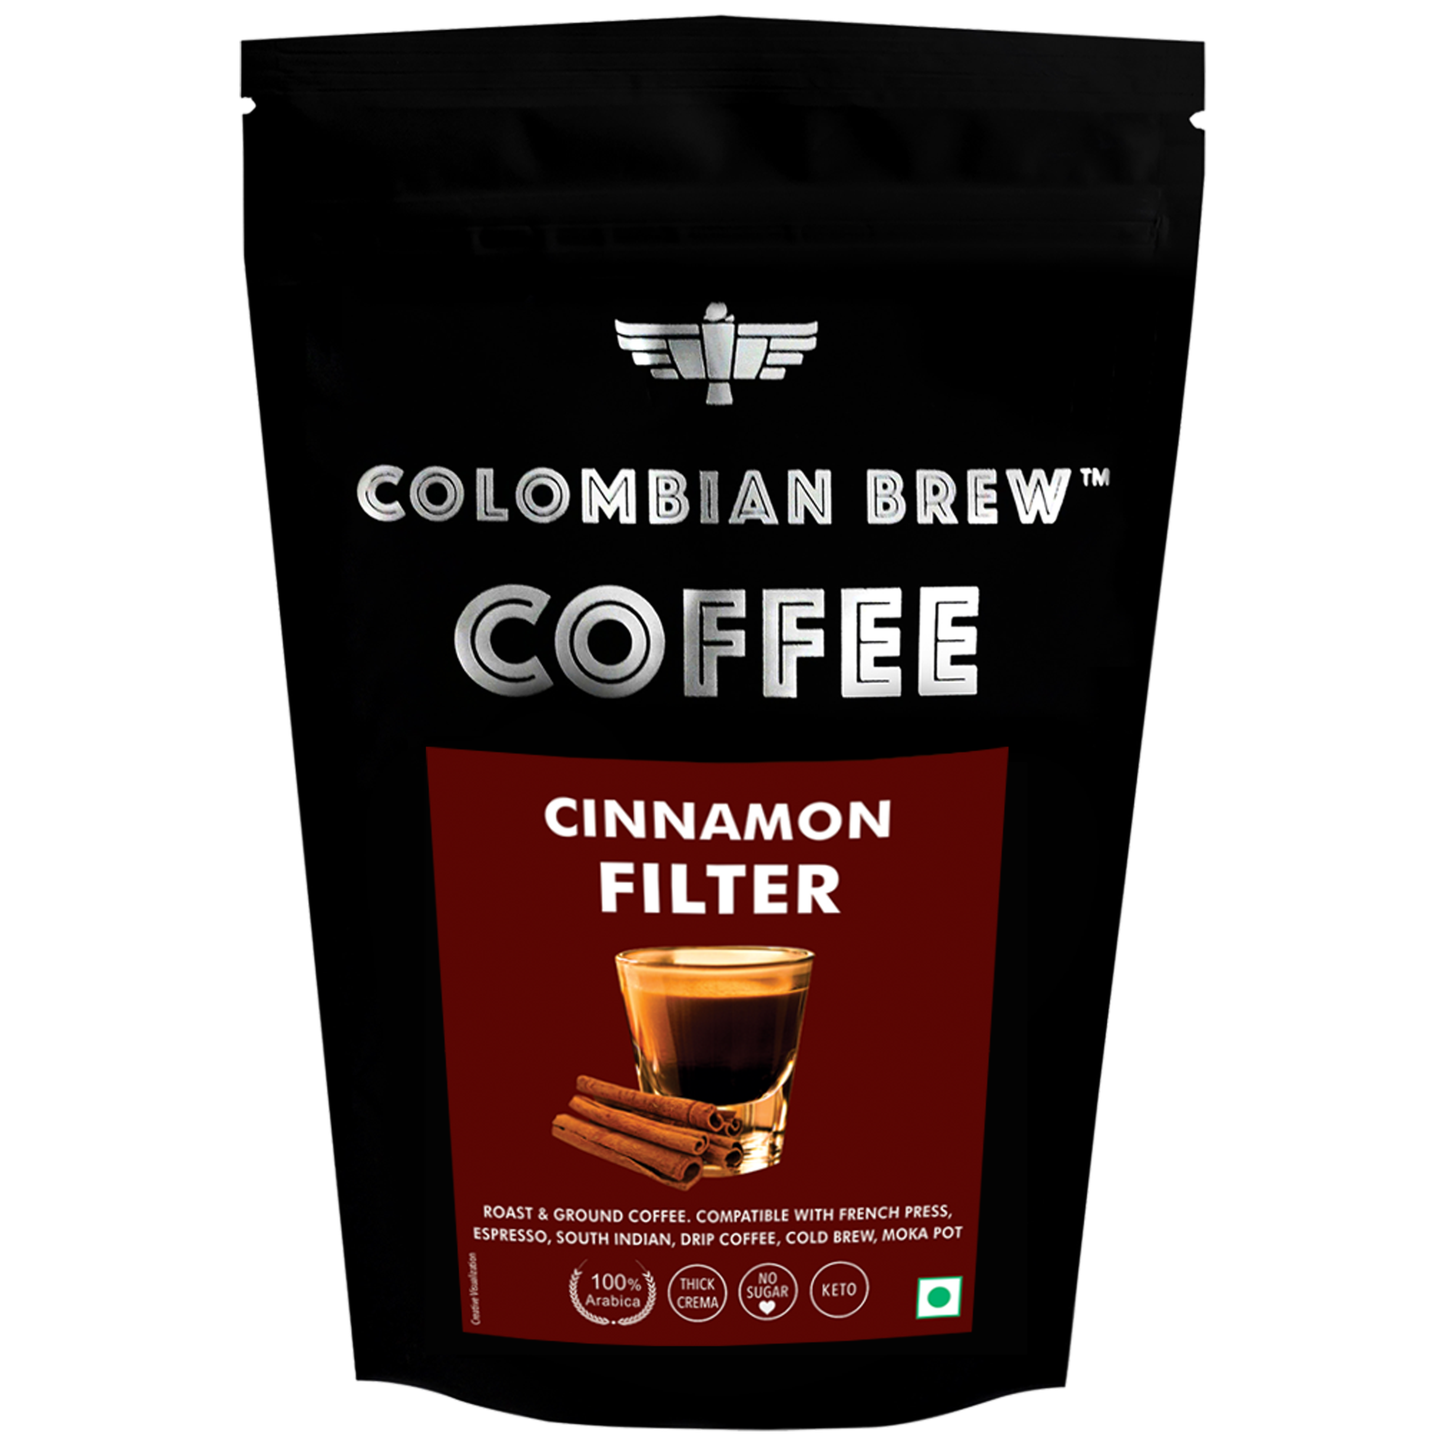 Colombian Brew Cinnamon Filter Coffee Powder, Arabica Roast & Ground, 1kg 